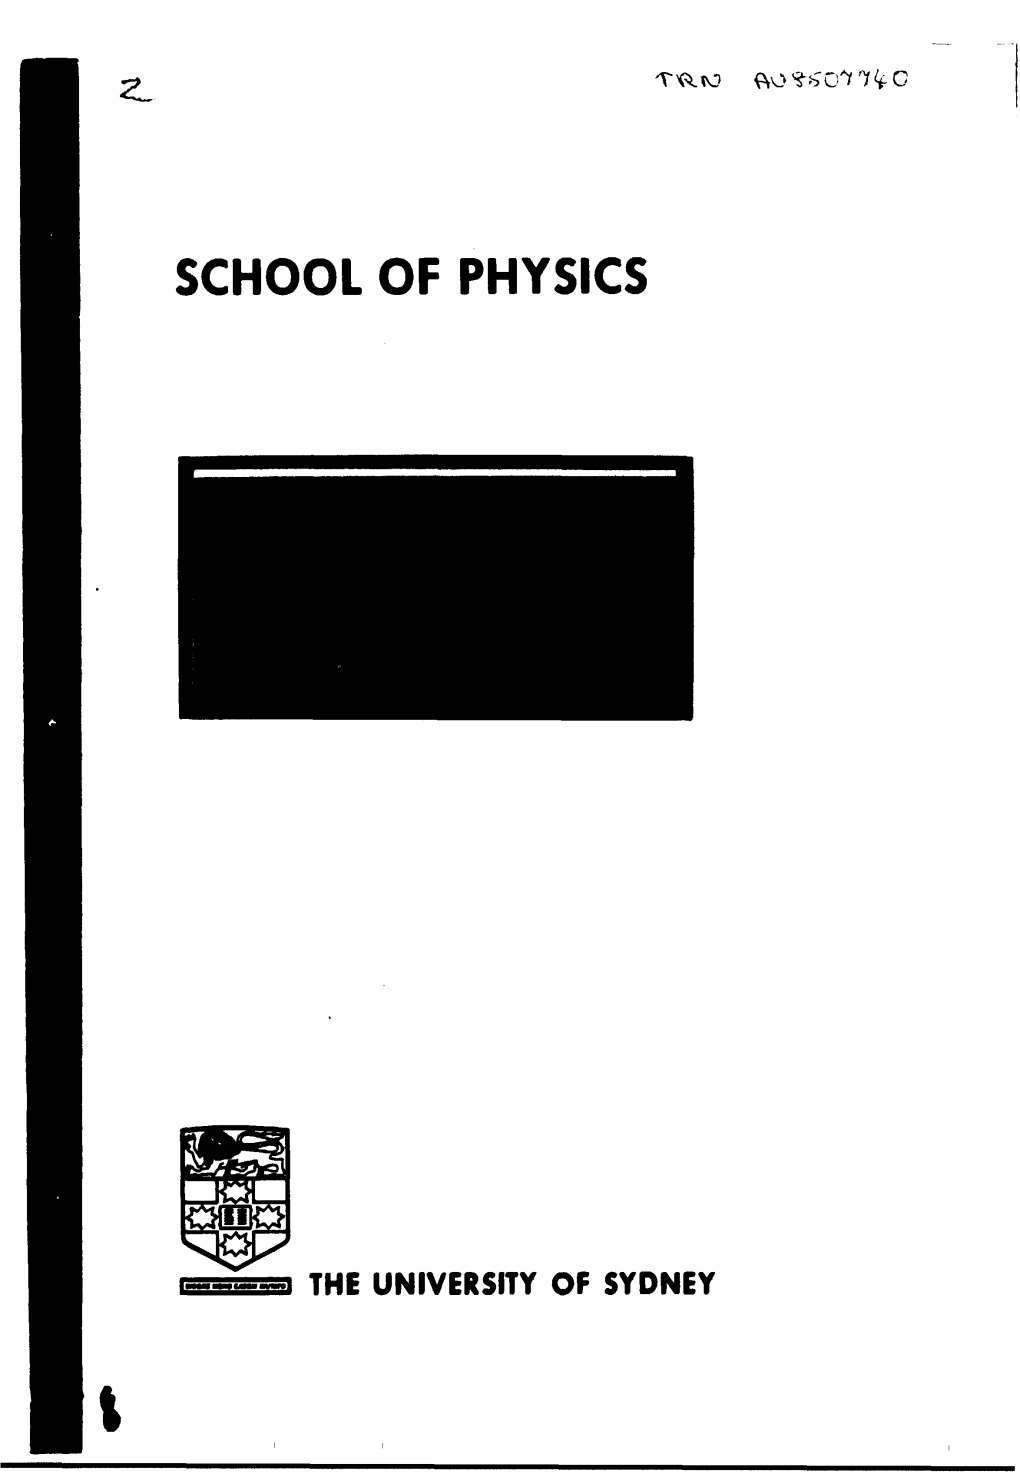 School of Physics